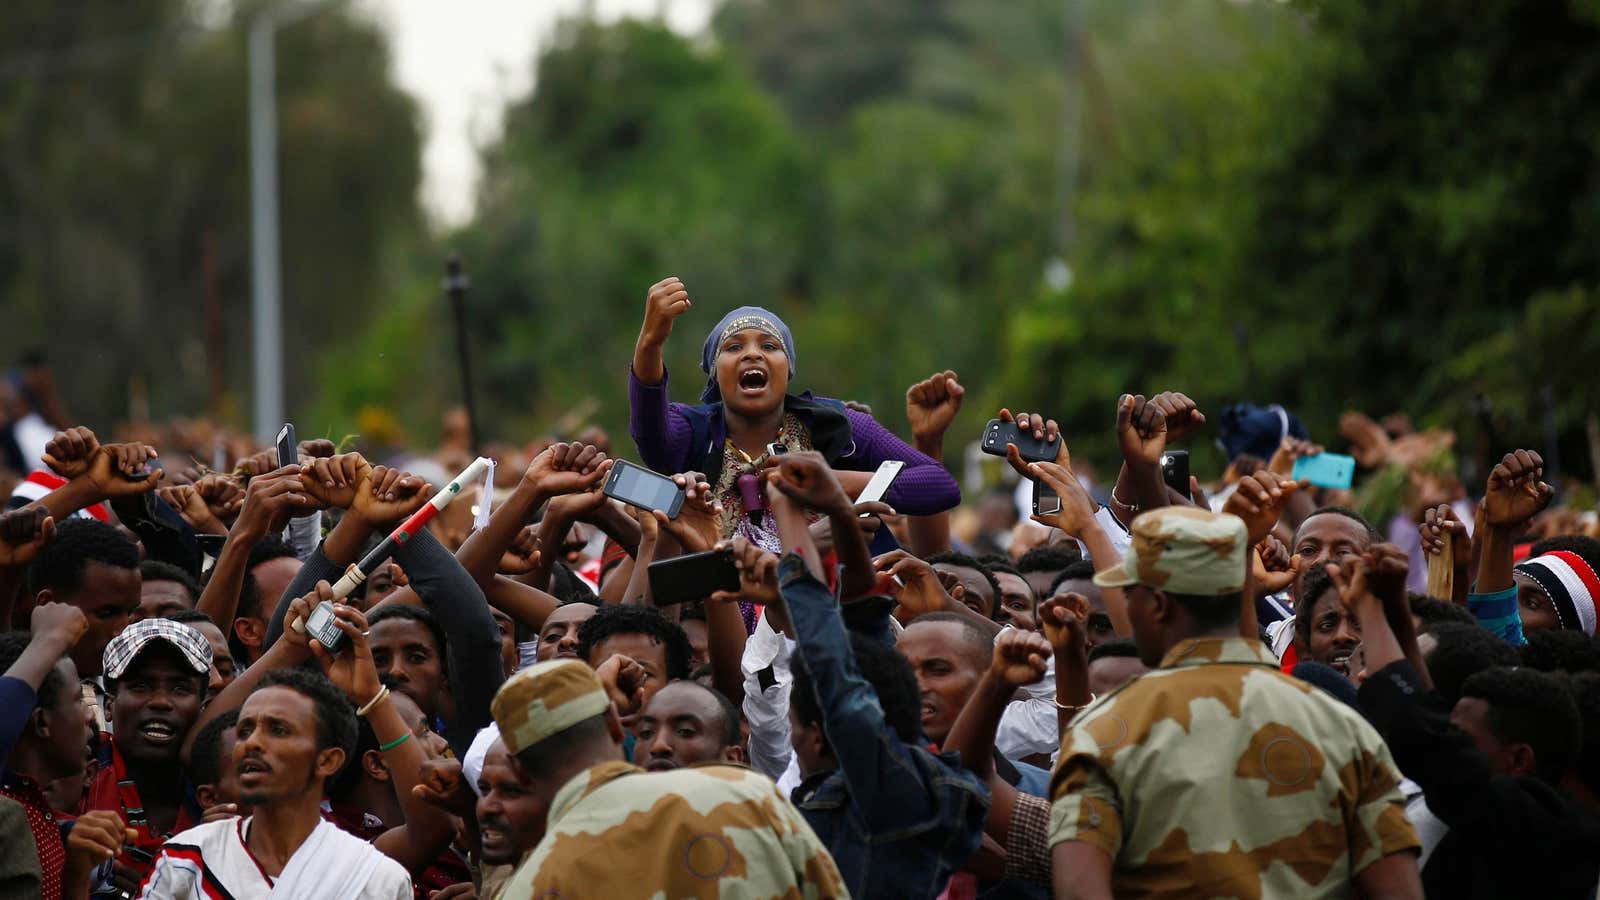 Addis Ababa hears you.